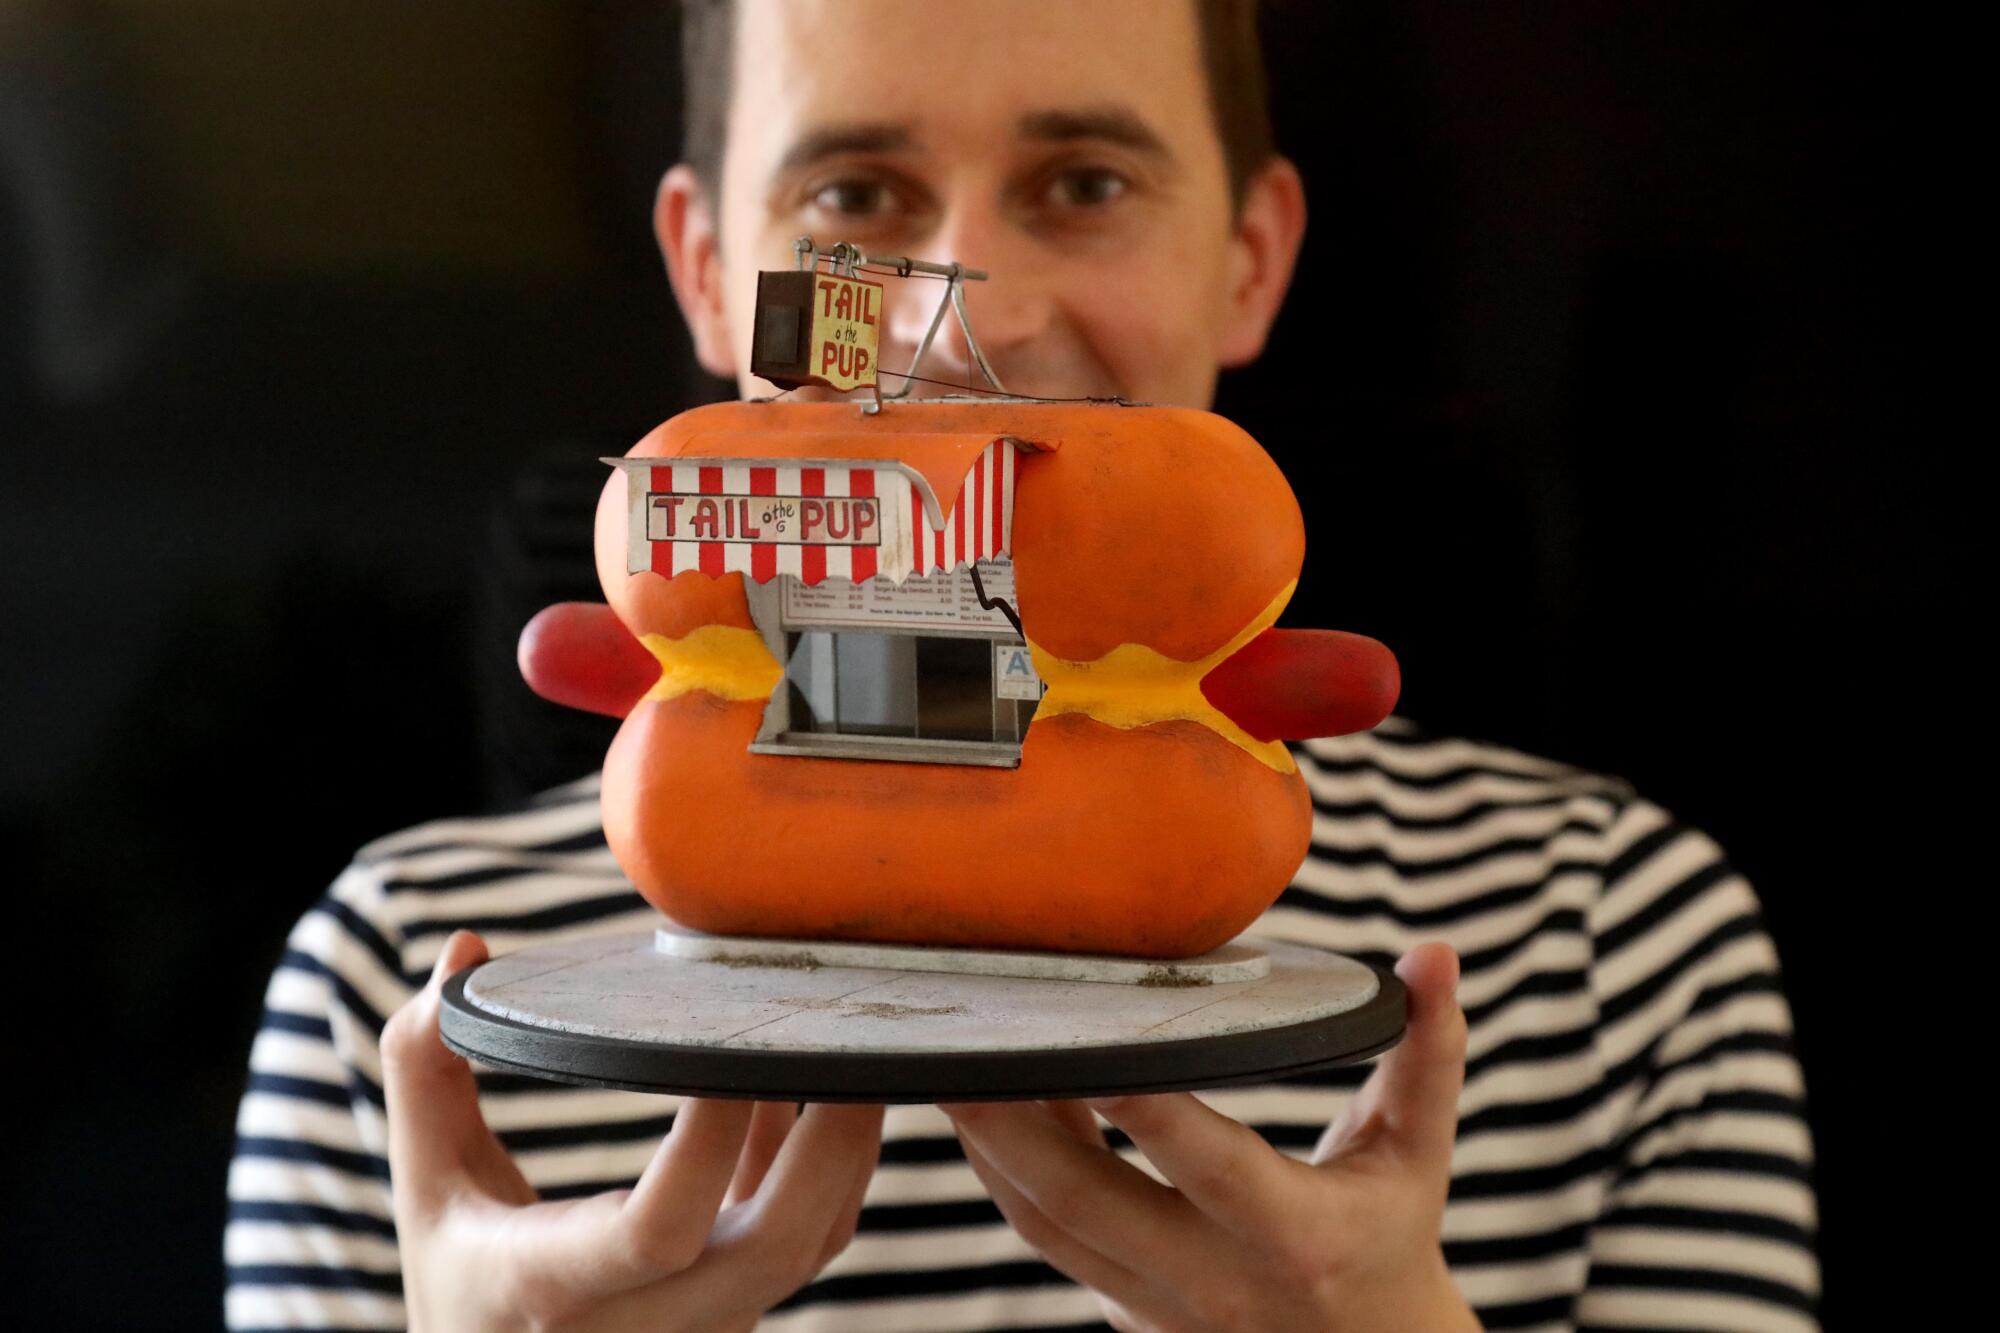 Kieran Wright holds his miniature model of a hotdog-shaped hotdog stand